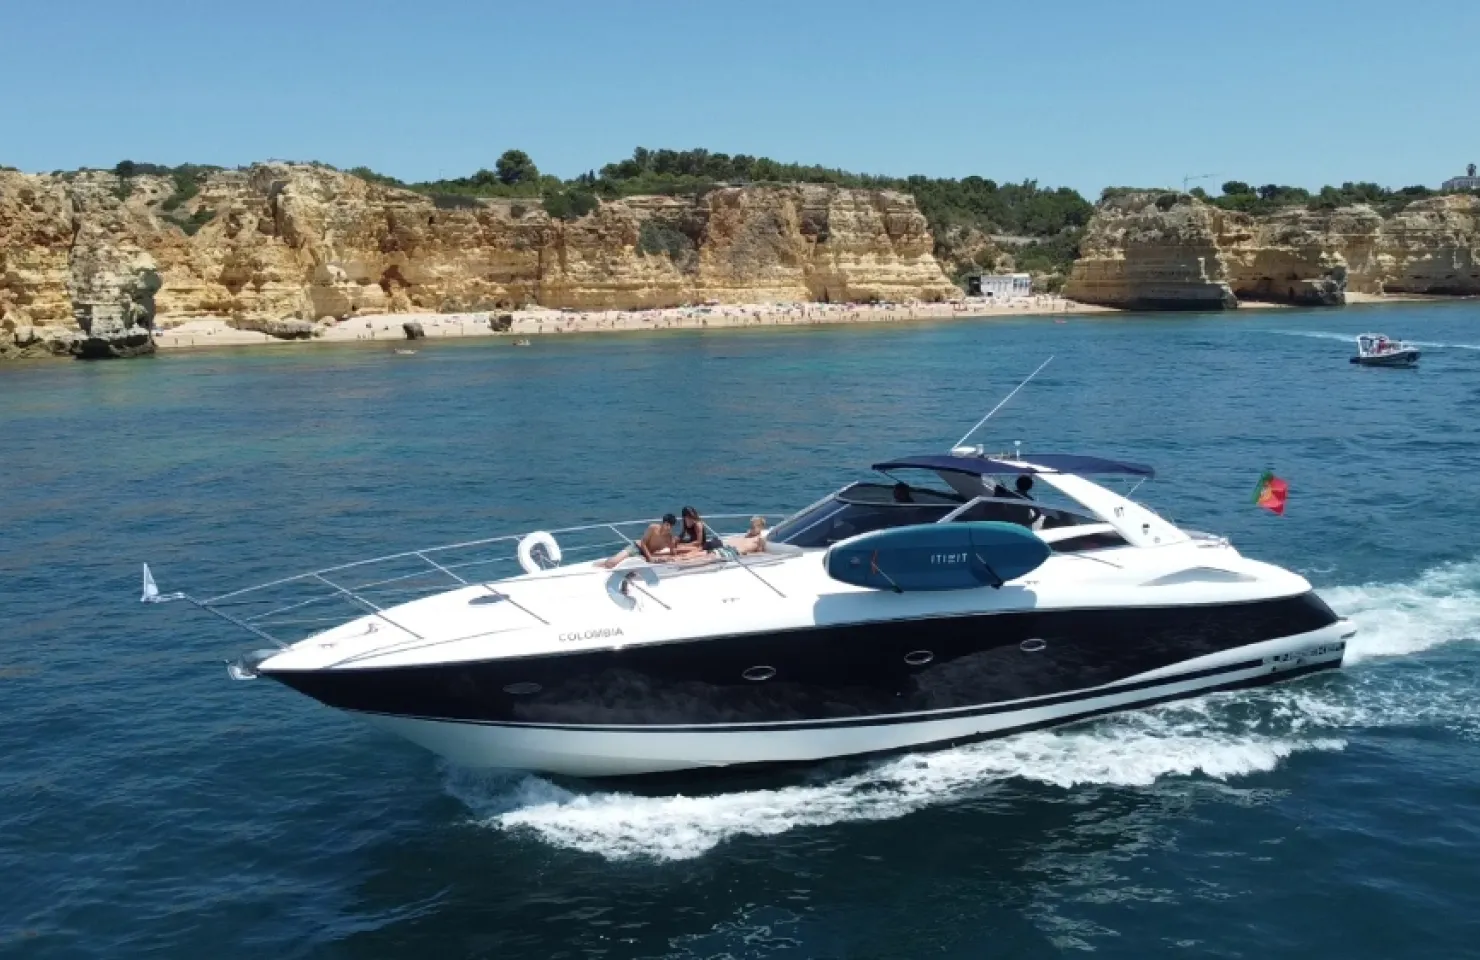 Algarve Yacht Charter - Vilamoura things to do